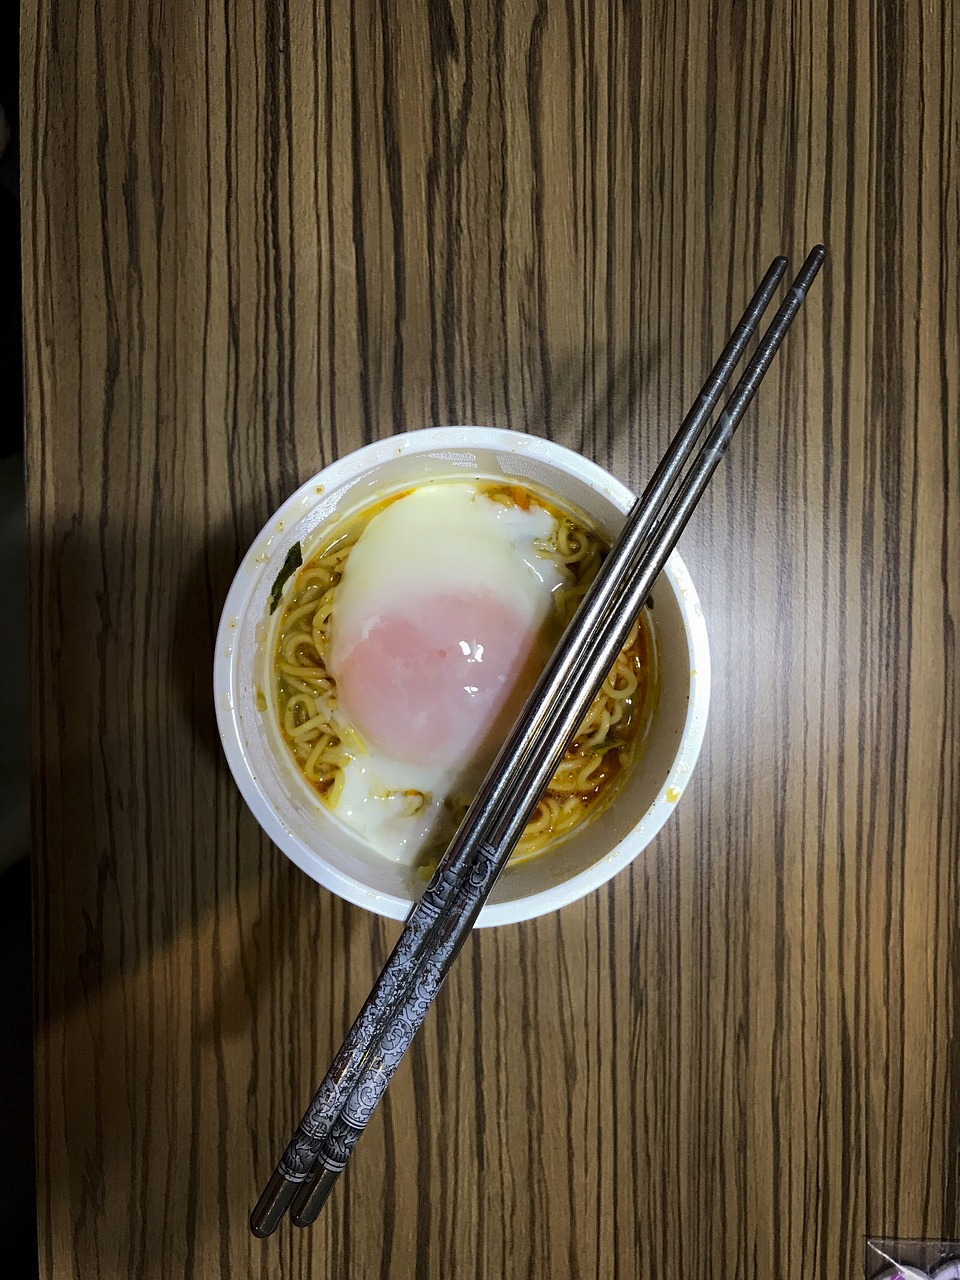 Asian Carryout Noodles